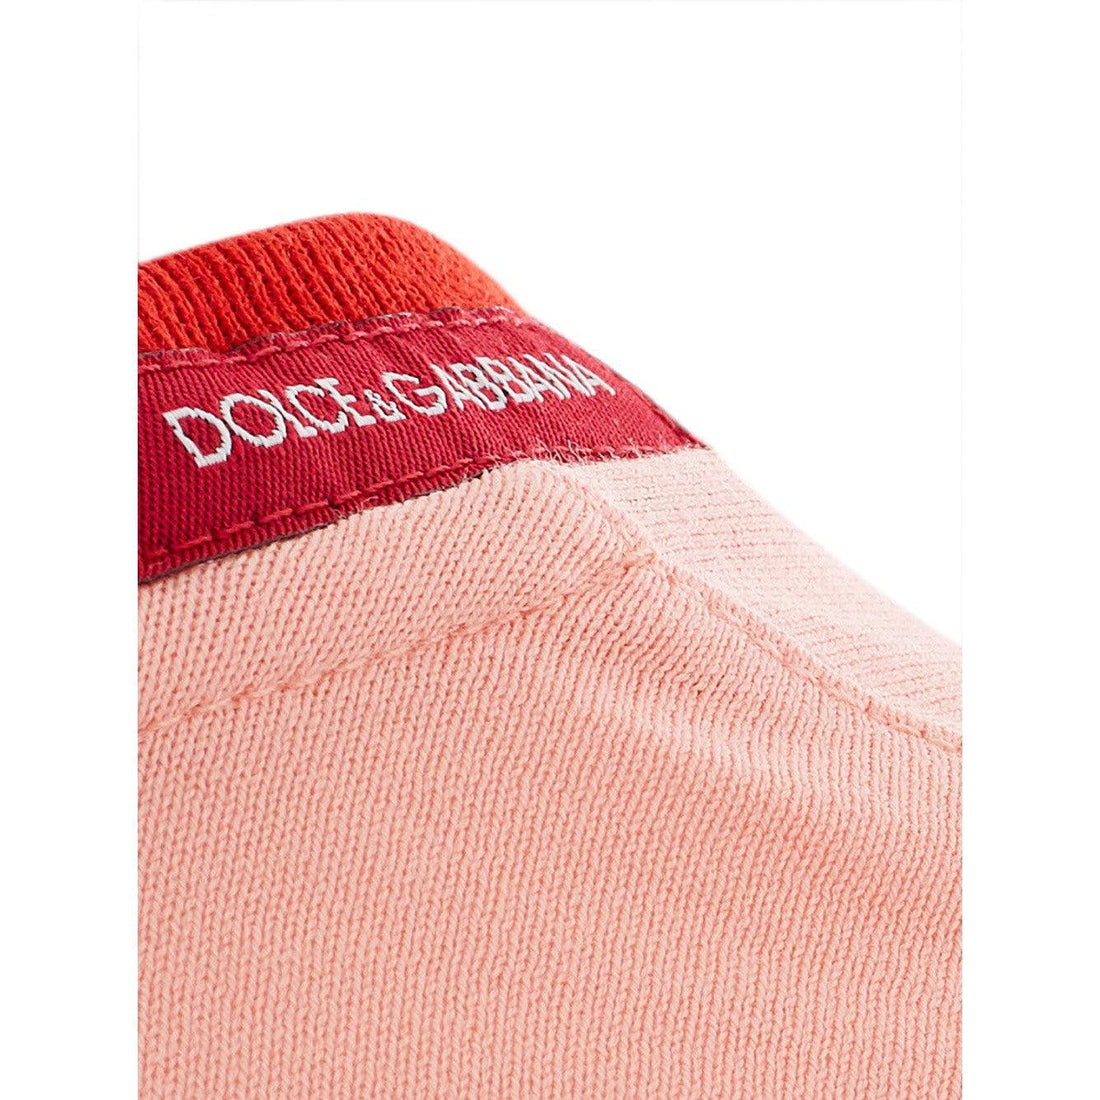 Dolce & Gabbana Pink Cotton T-Shirt with Logo